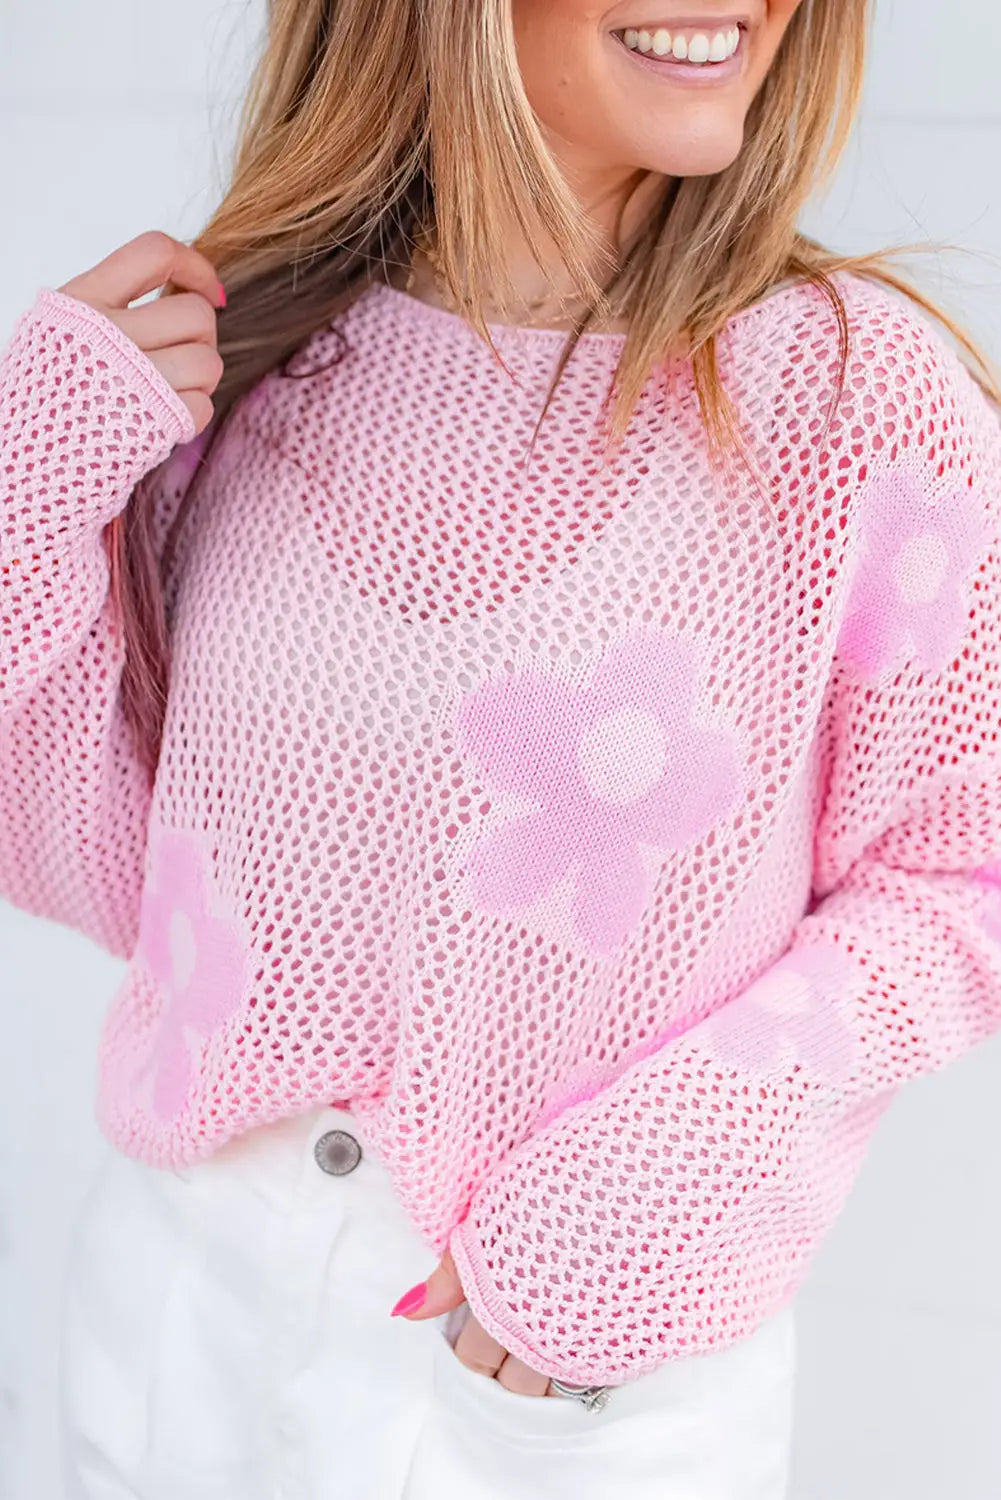 Light pink big flower summer knit sweater - s / 55% acrylic + 45% cotton - tops & tees